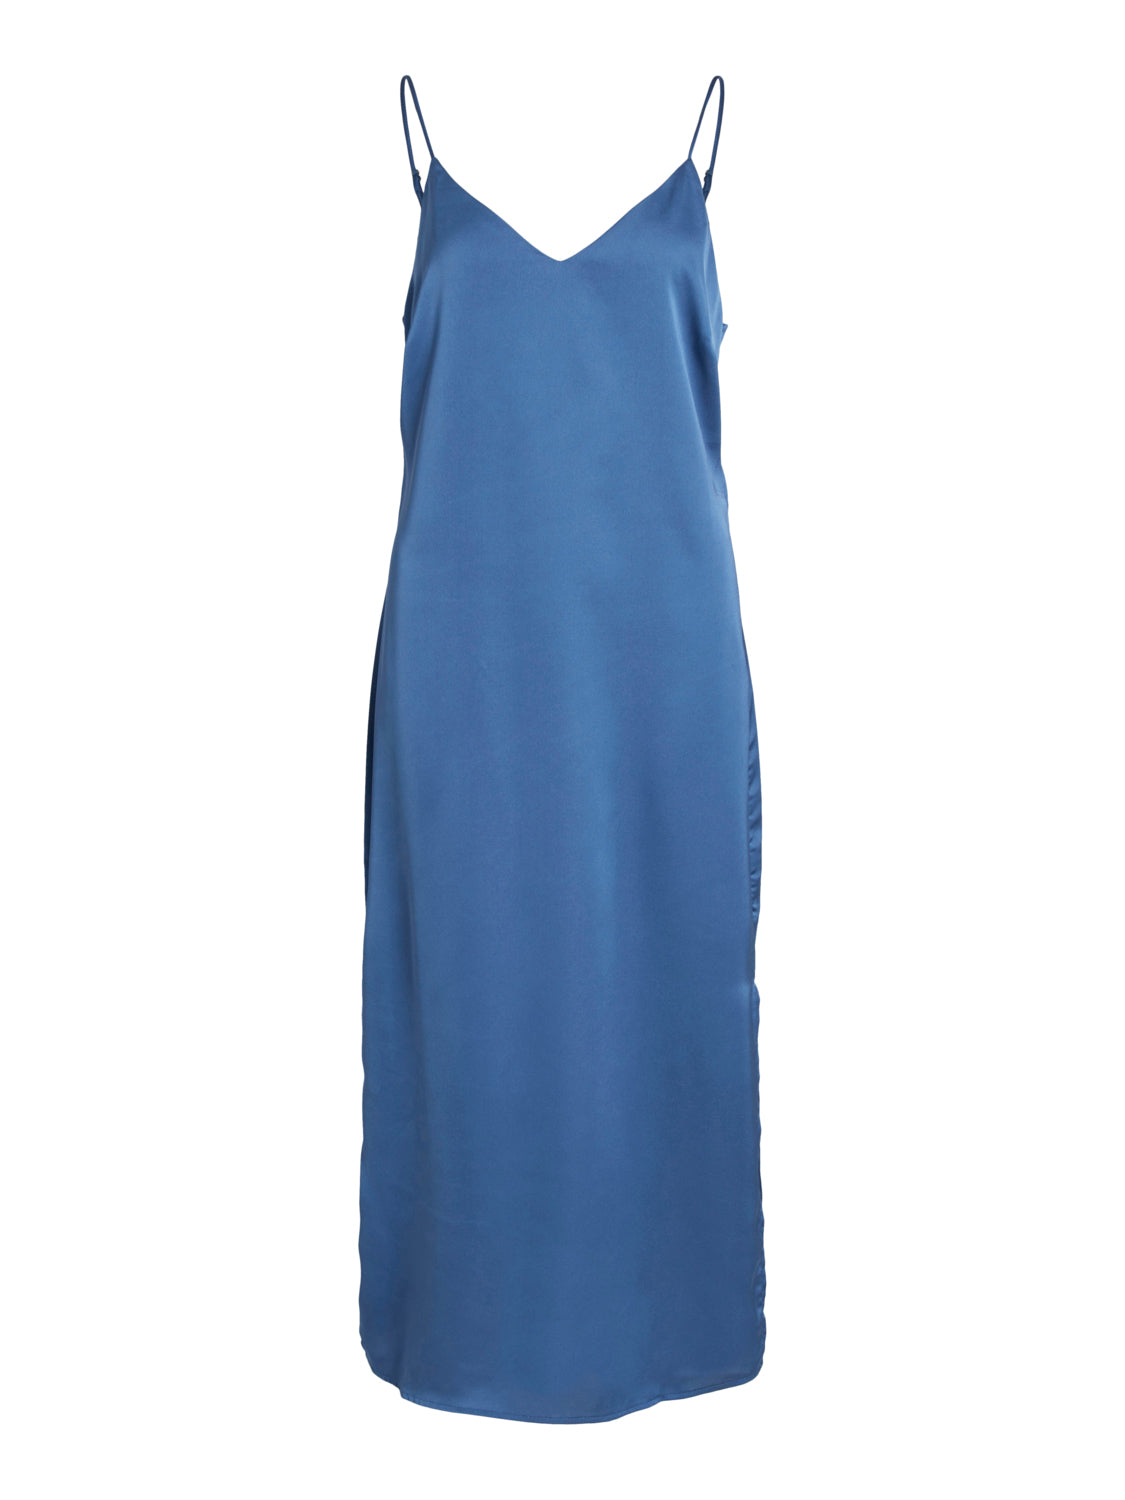 VIELLETTE Dress - Federal Blue